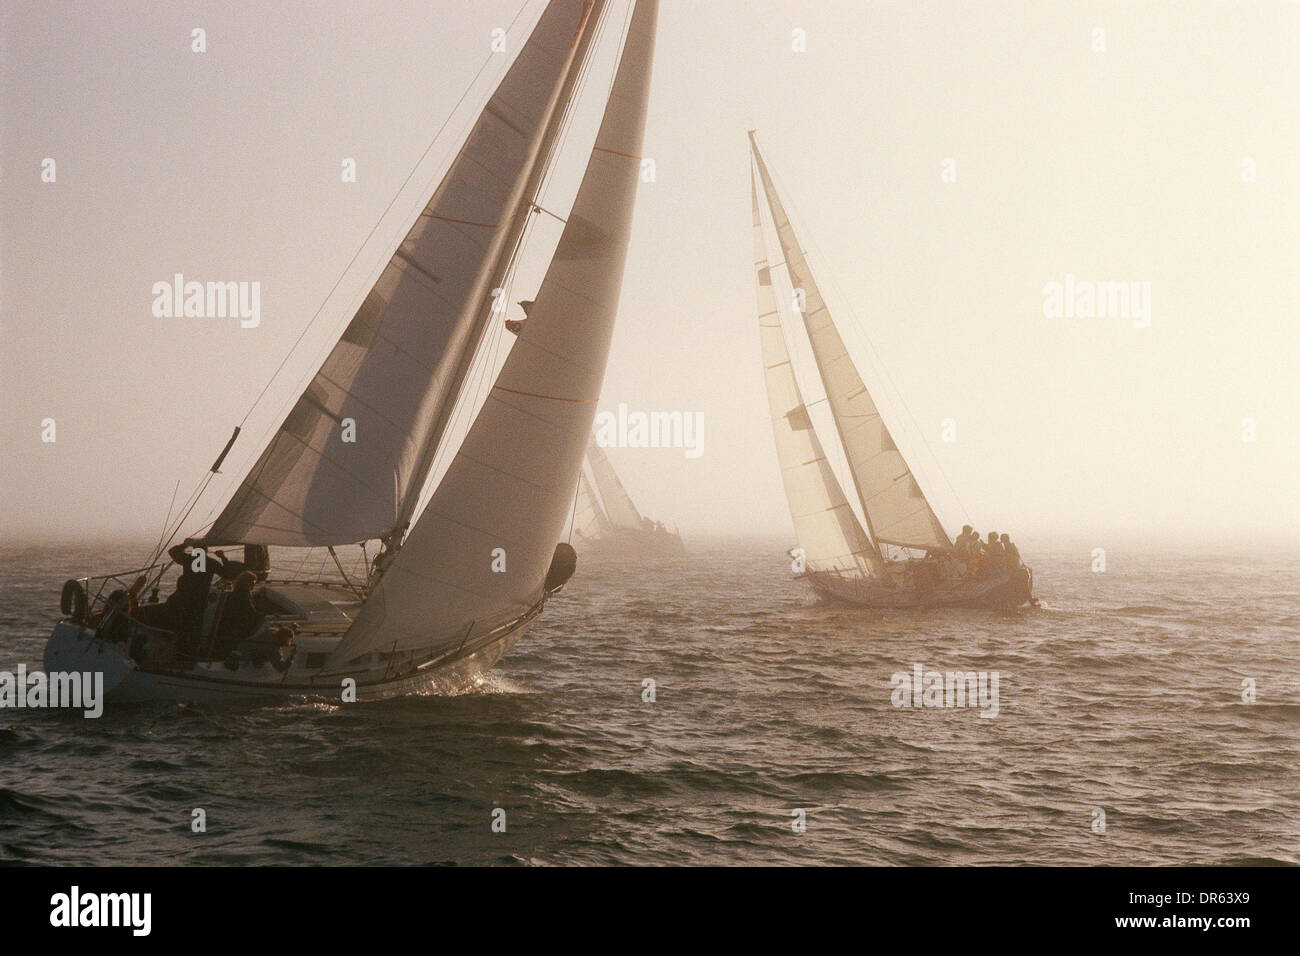 Sailboats racing upwind in ocean fog. Stock Photo